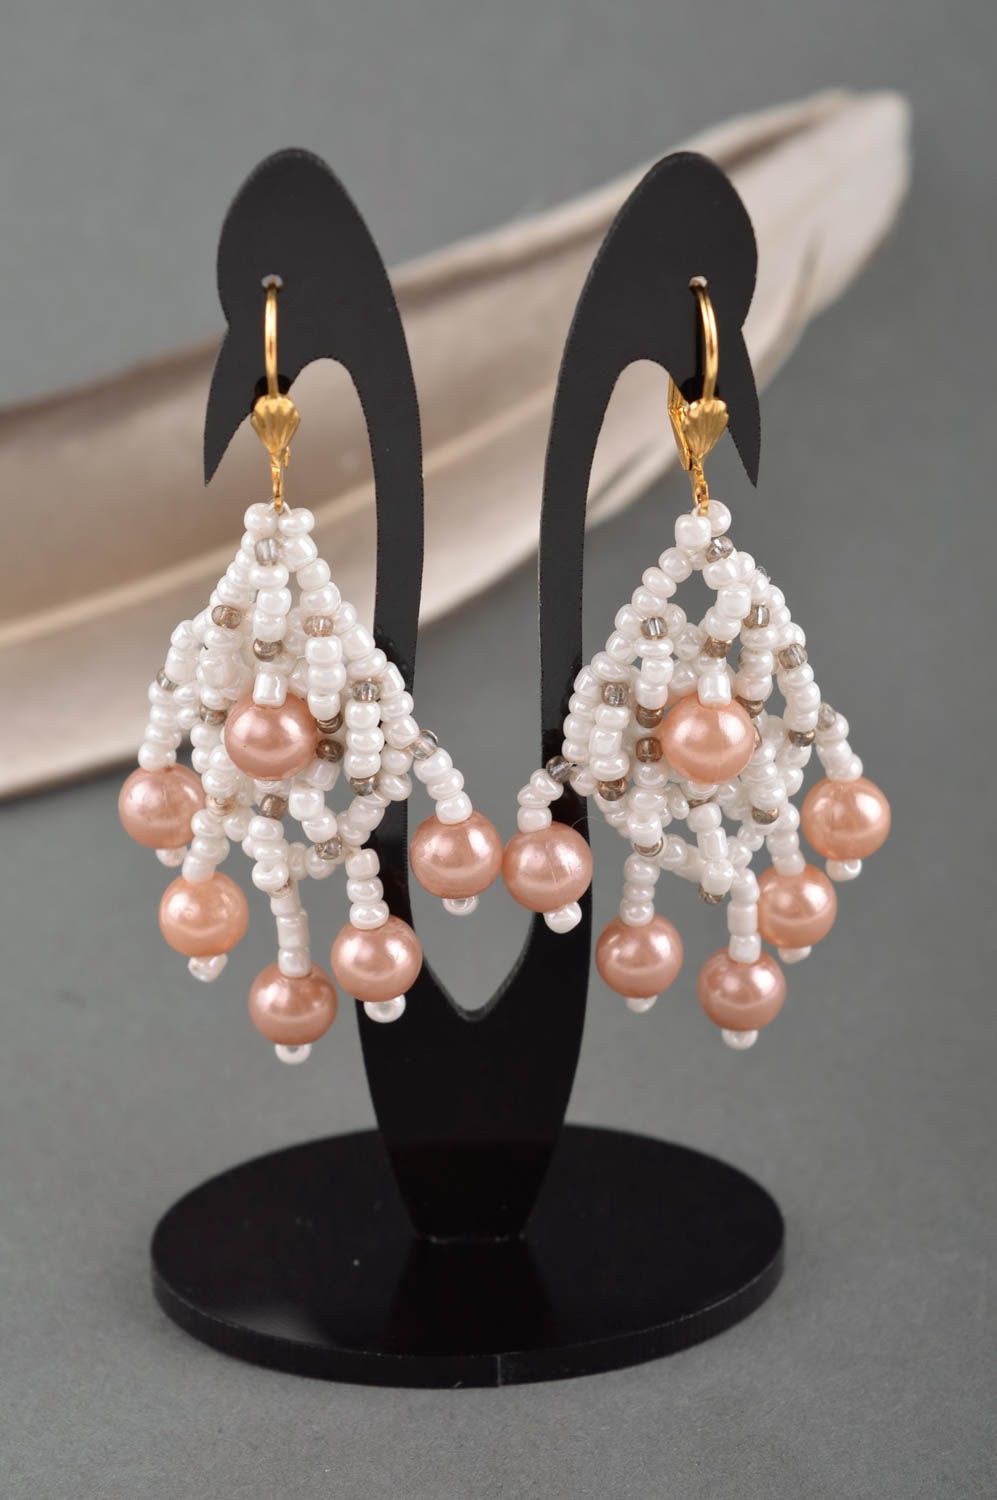 Handmade earrings designer earrings unusual accessory designer jewelry photo 1